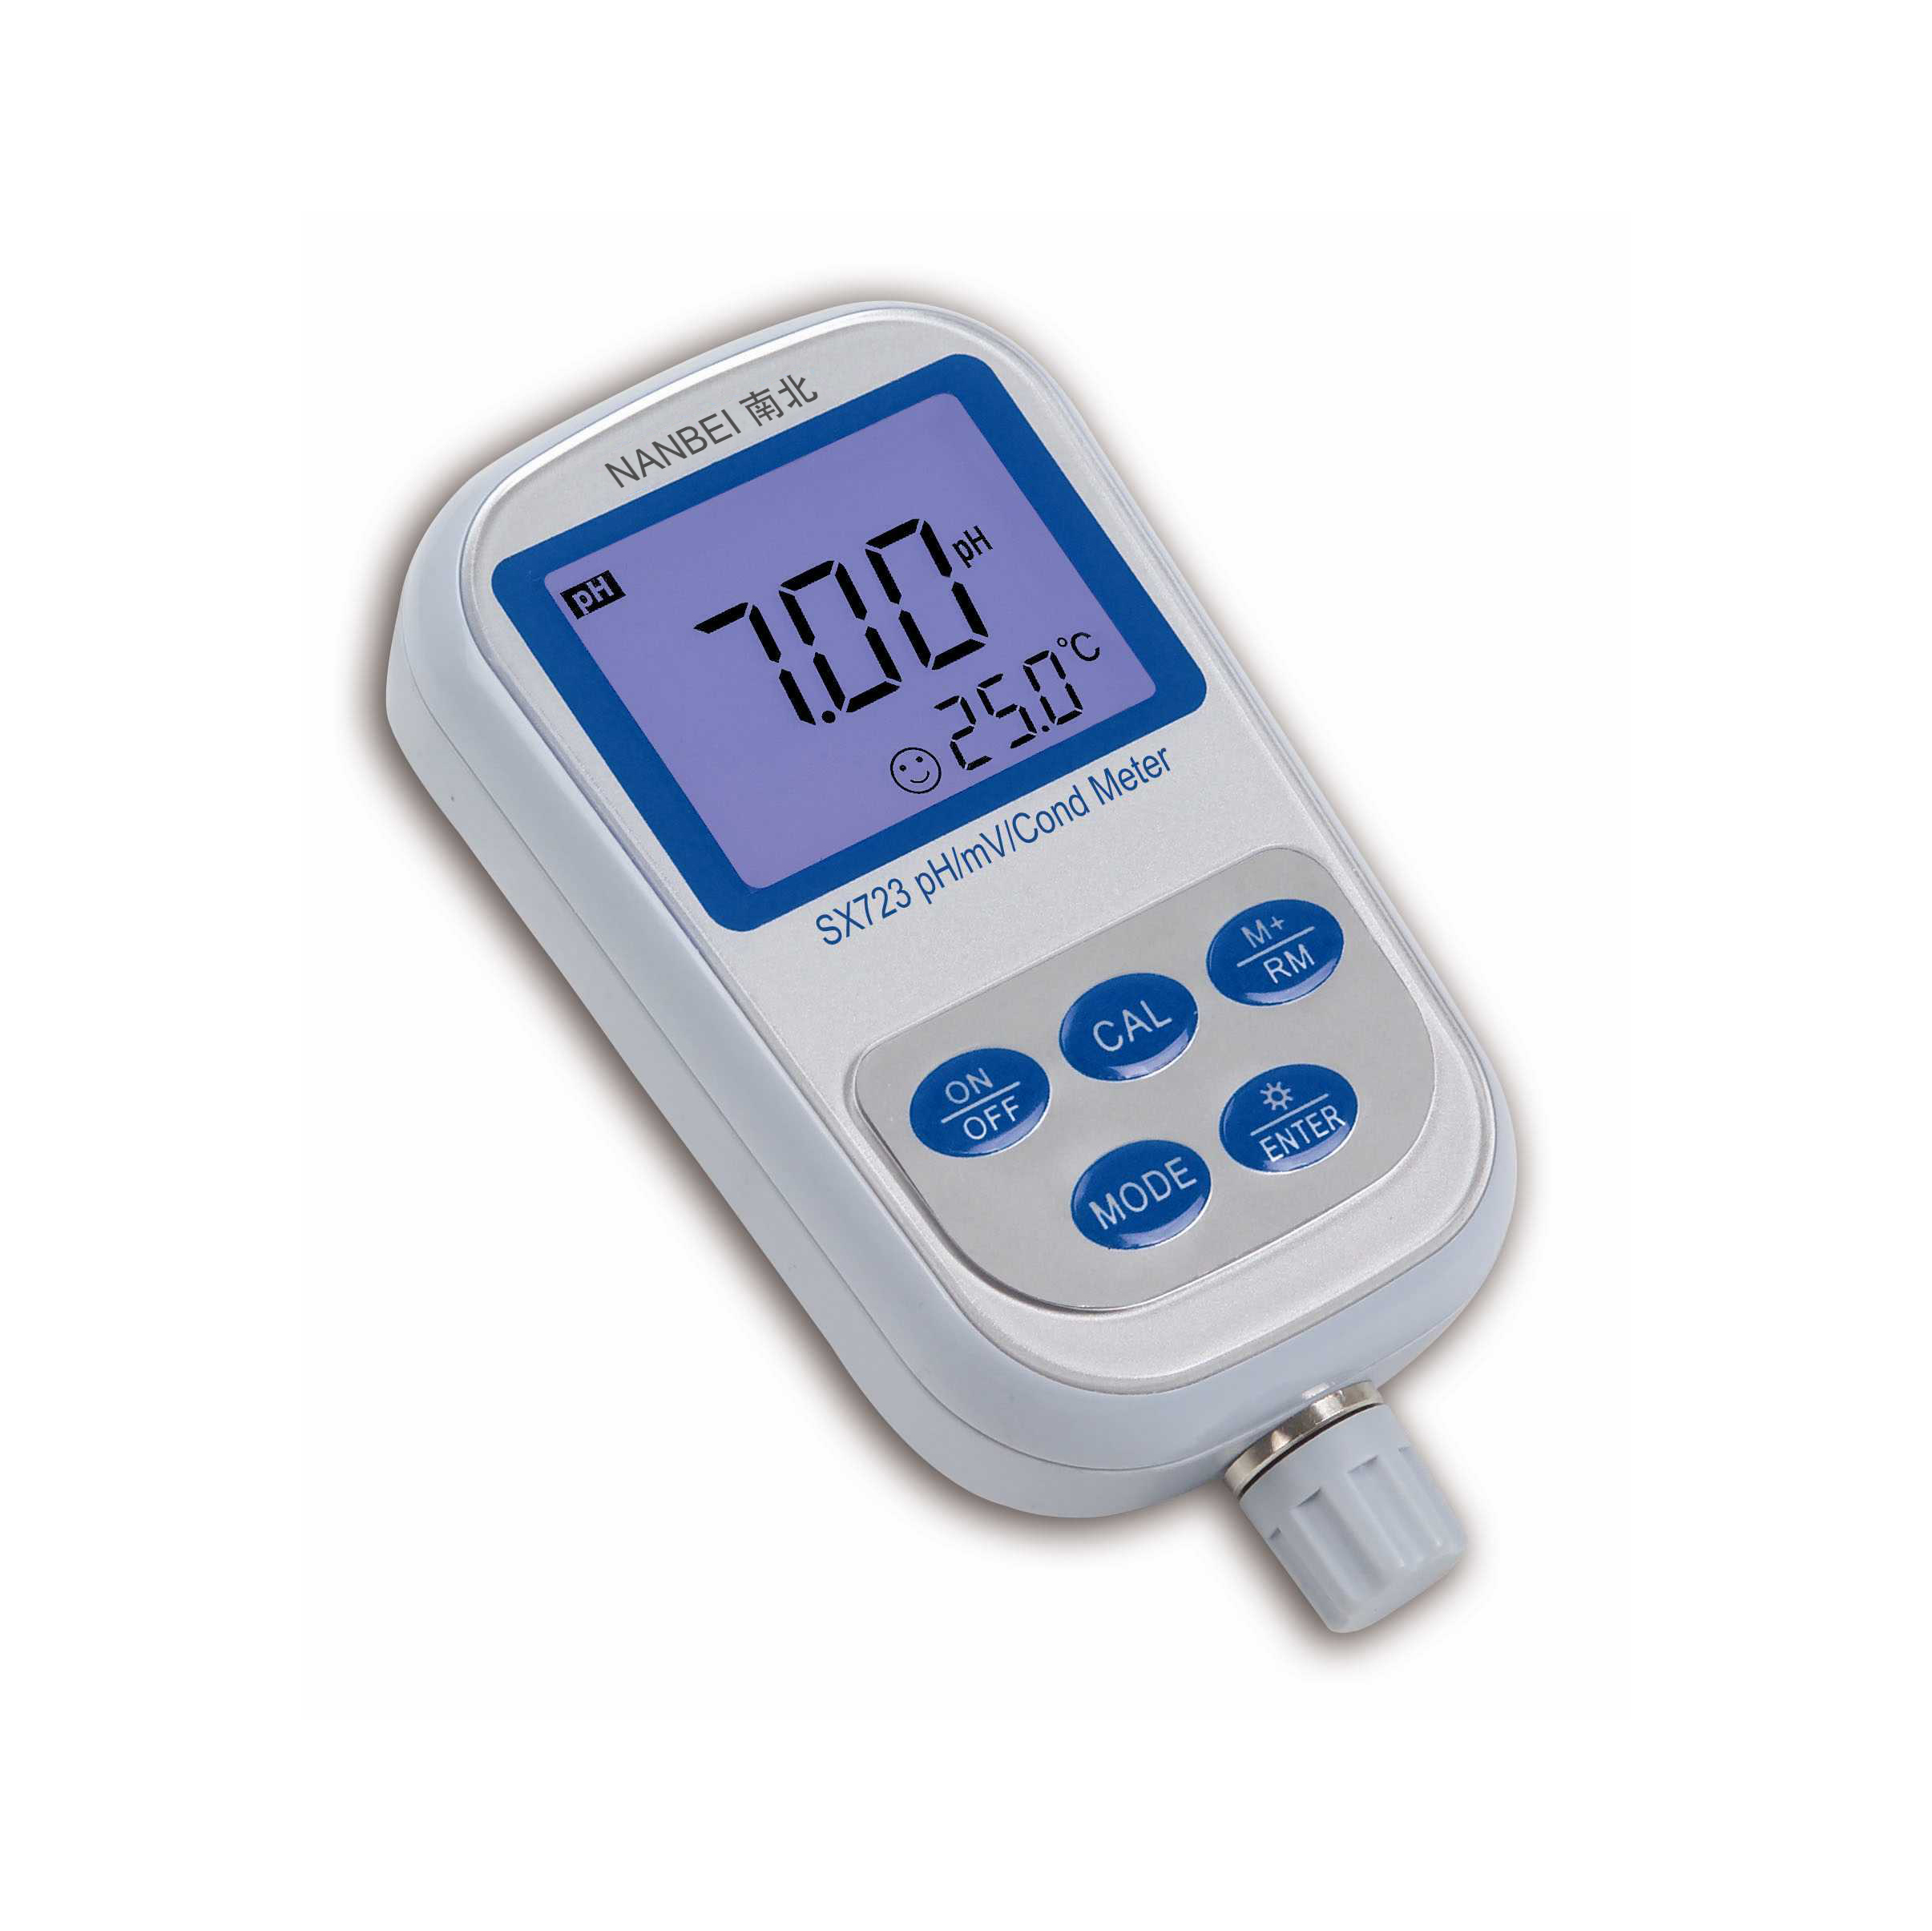 SX726 Portable Conductivity / Dissolved Oxygen Meter